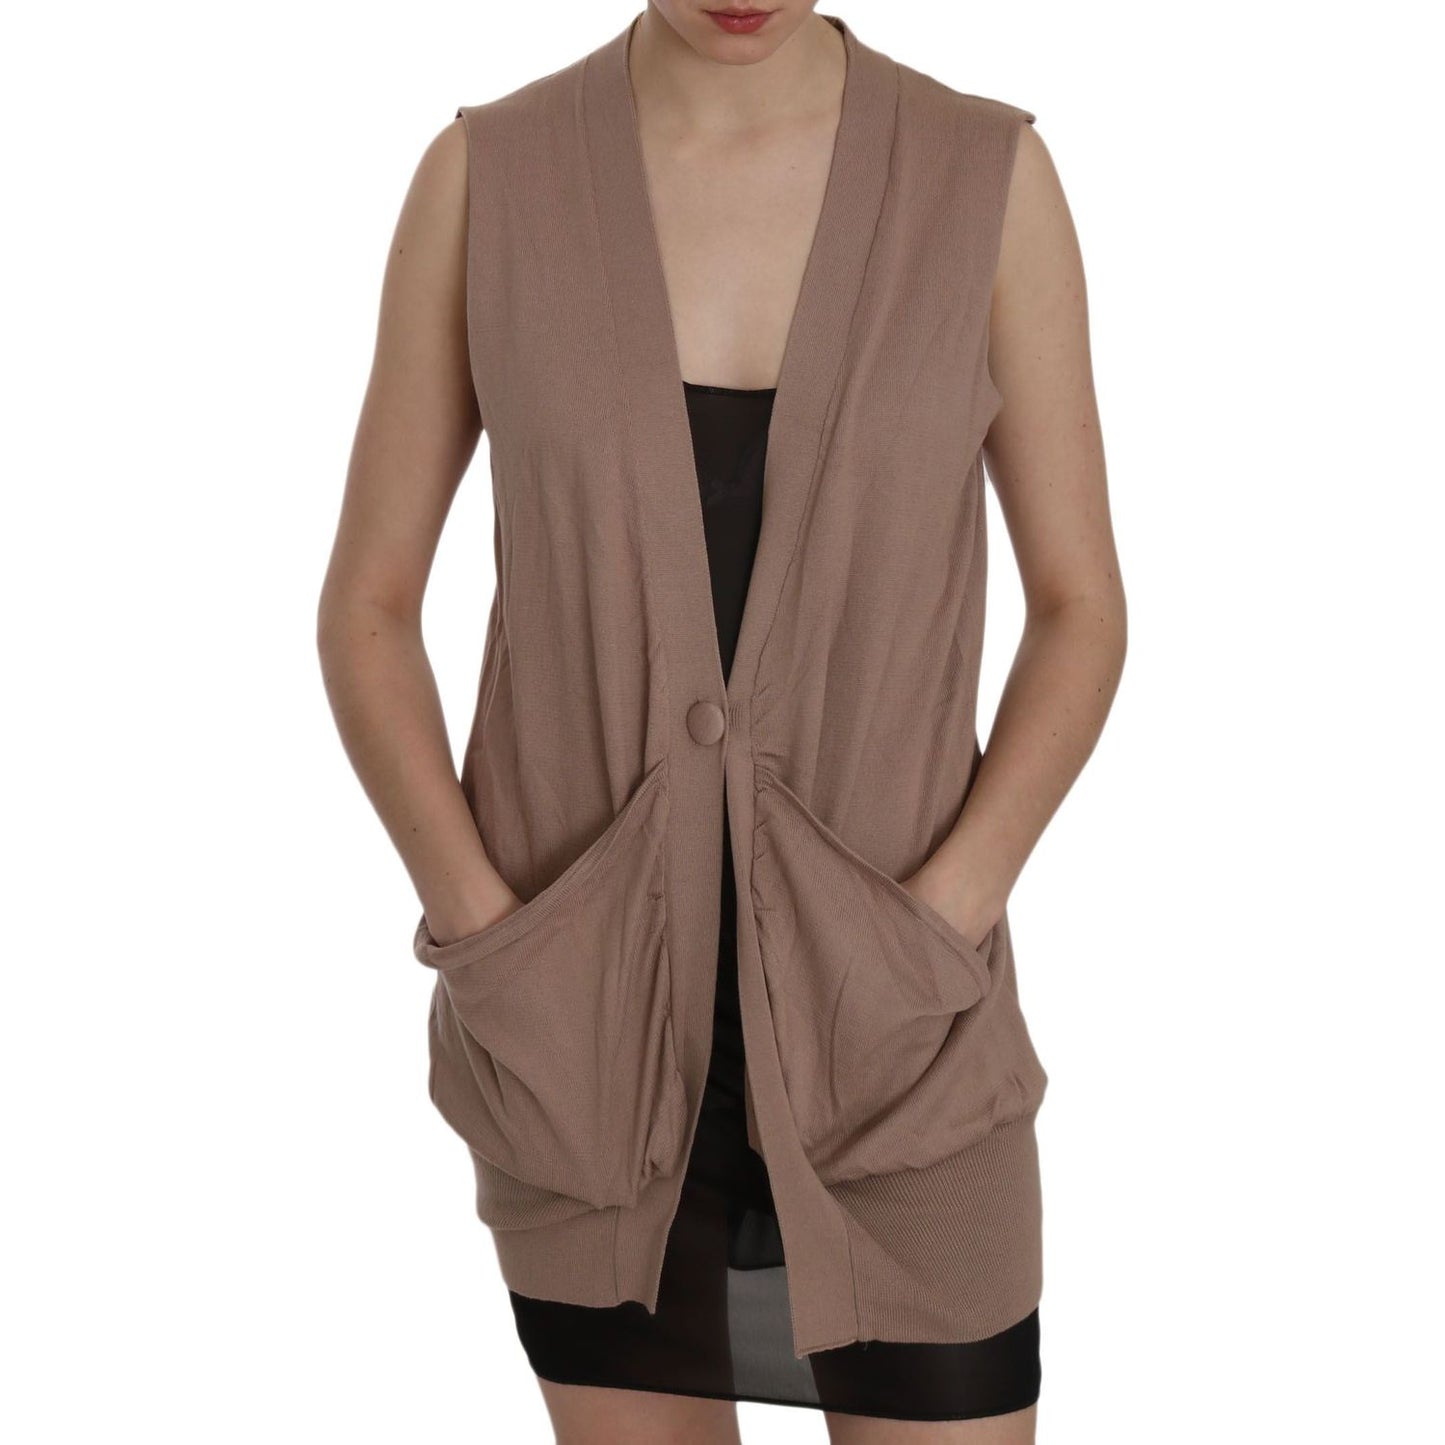 PINK MEMORIES Chic Sleeveless Cotton Cardigan Vest - Elegant Brown brown-100-cotton-sleeveless-cardigan-top-vest-3 IMG_1941-157e9aa7-496.jpg